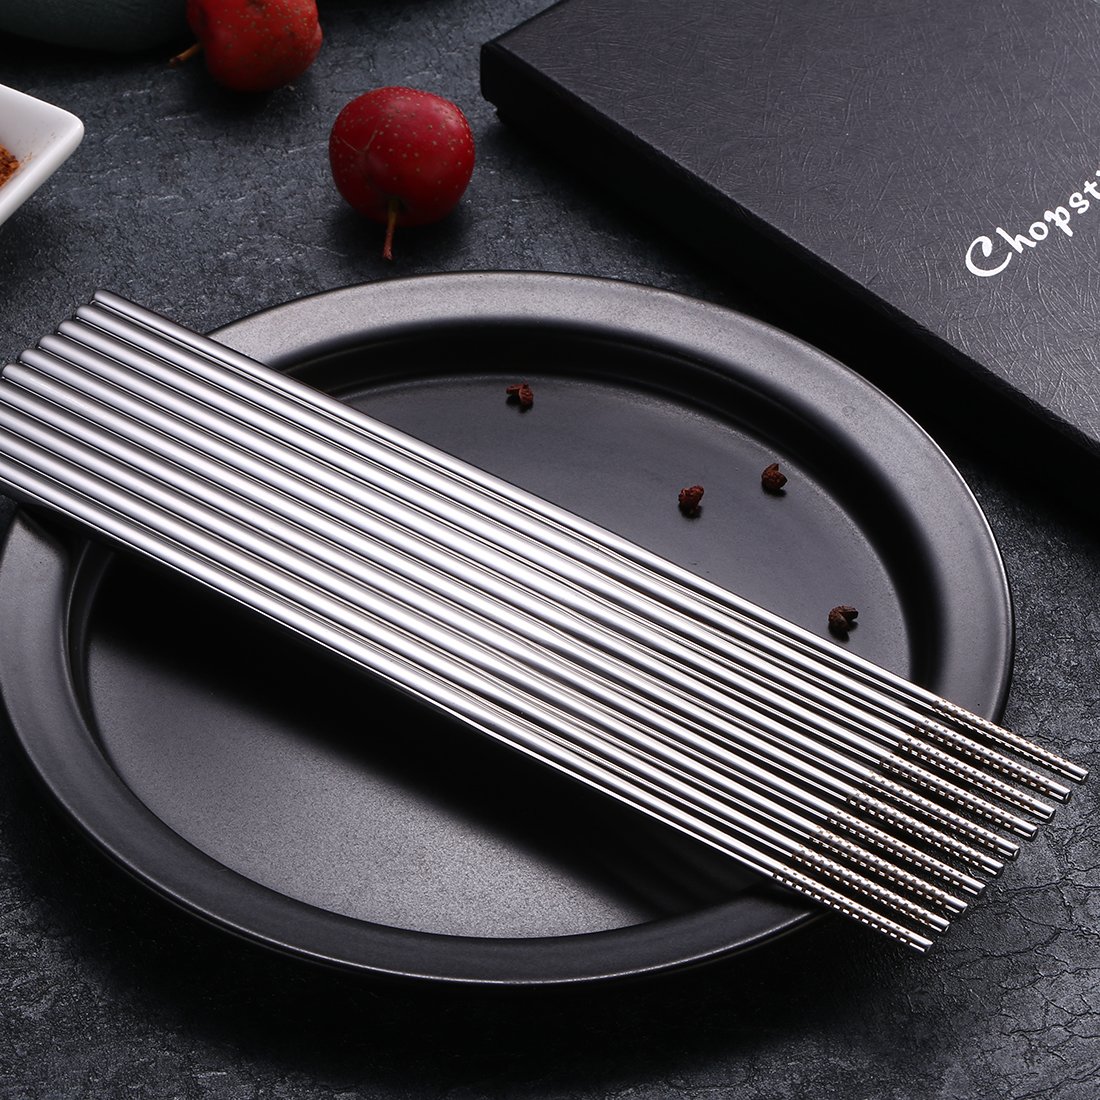 Devico Chopsticks, Metal Chopsticks, 18/10 Stainless Steel Chopstick Set, Reusable, Dishwasher Safe (5 pairs)